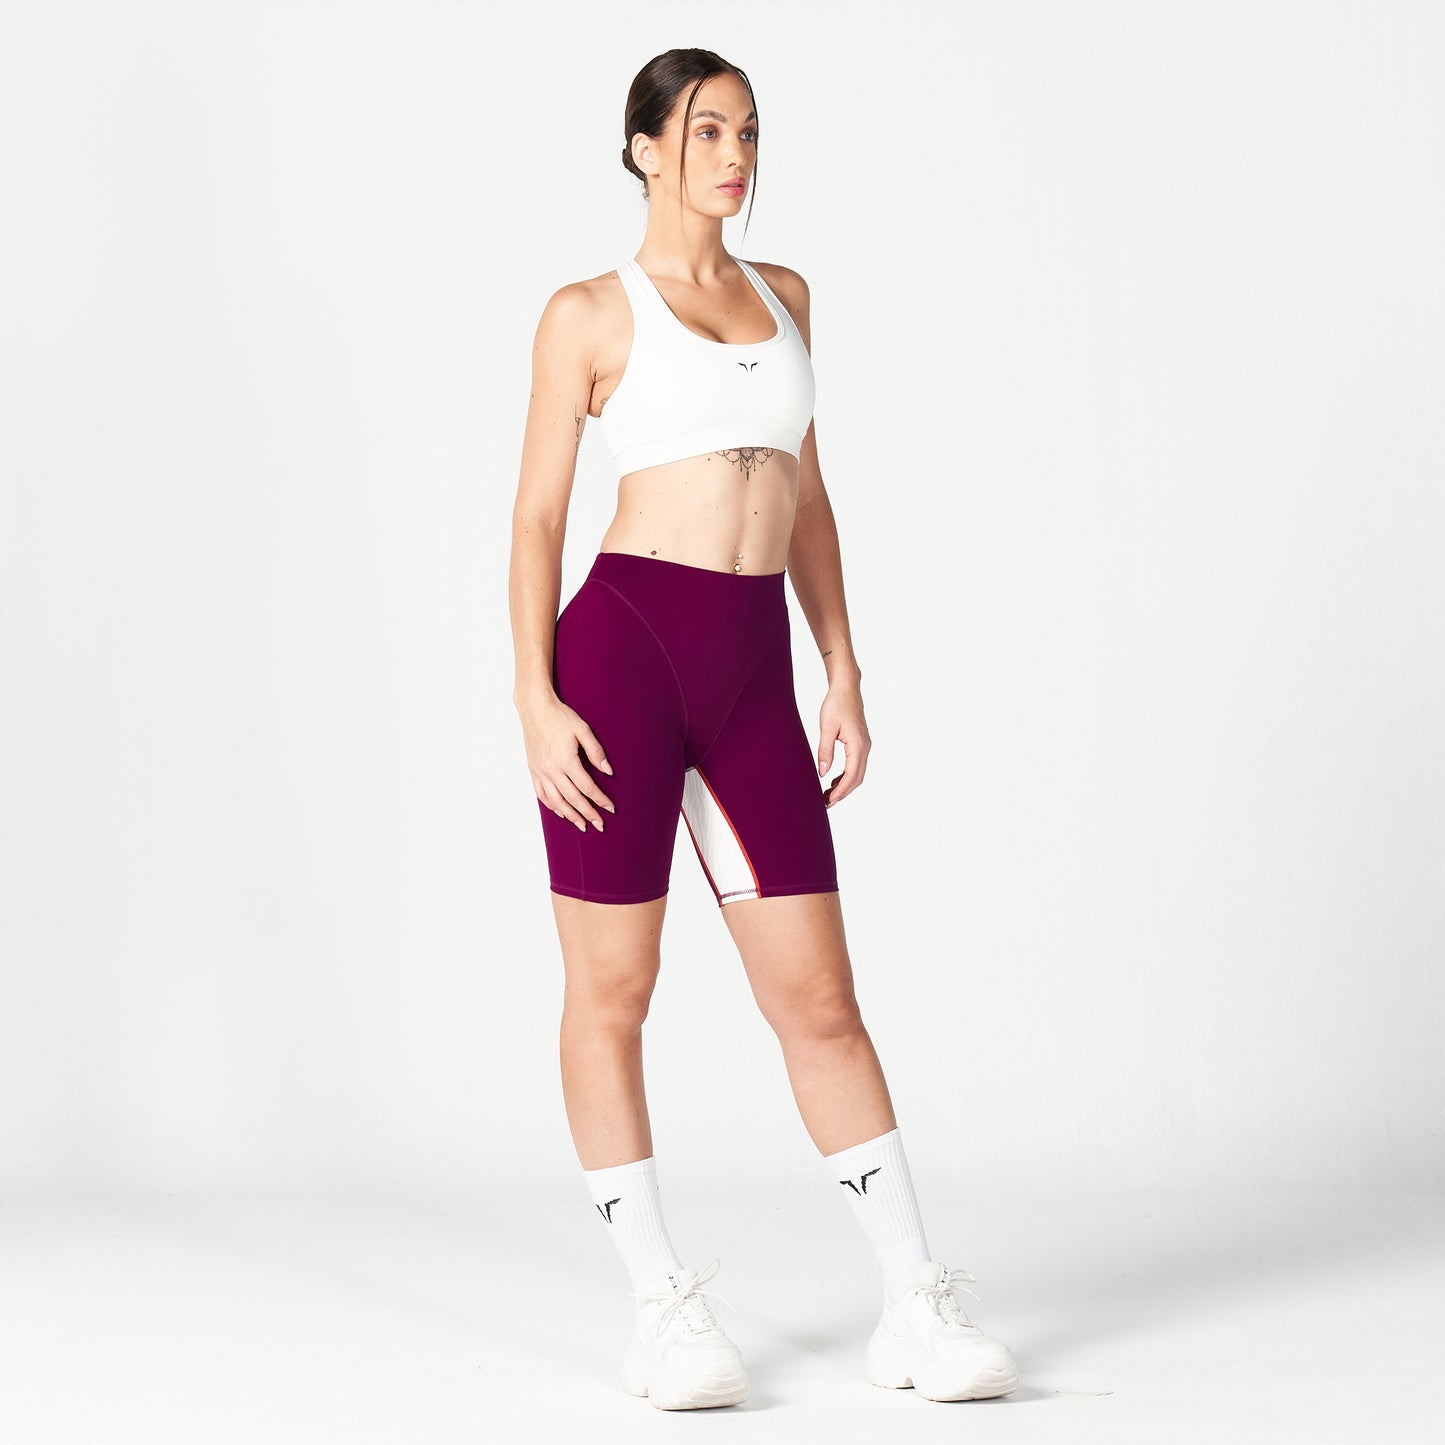 squatwolf-workout-clothes-core-v-biker-shorts-dark-purple-bike-shorts-women